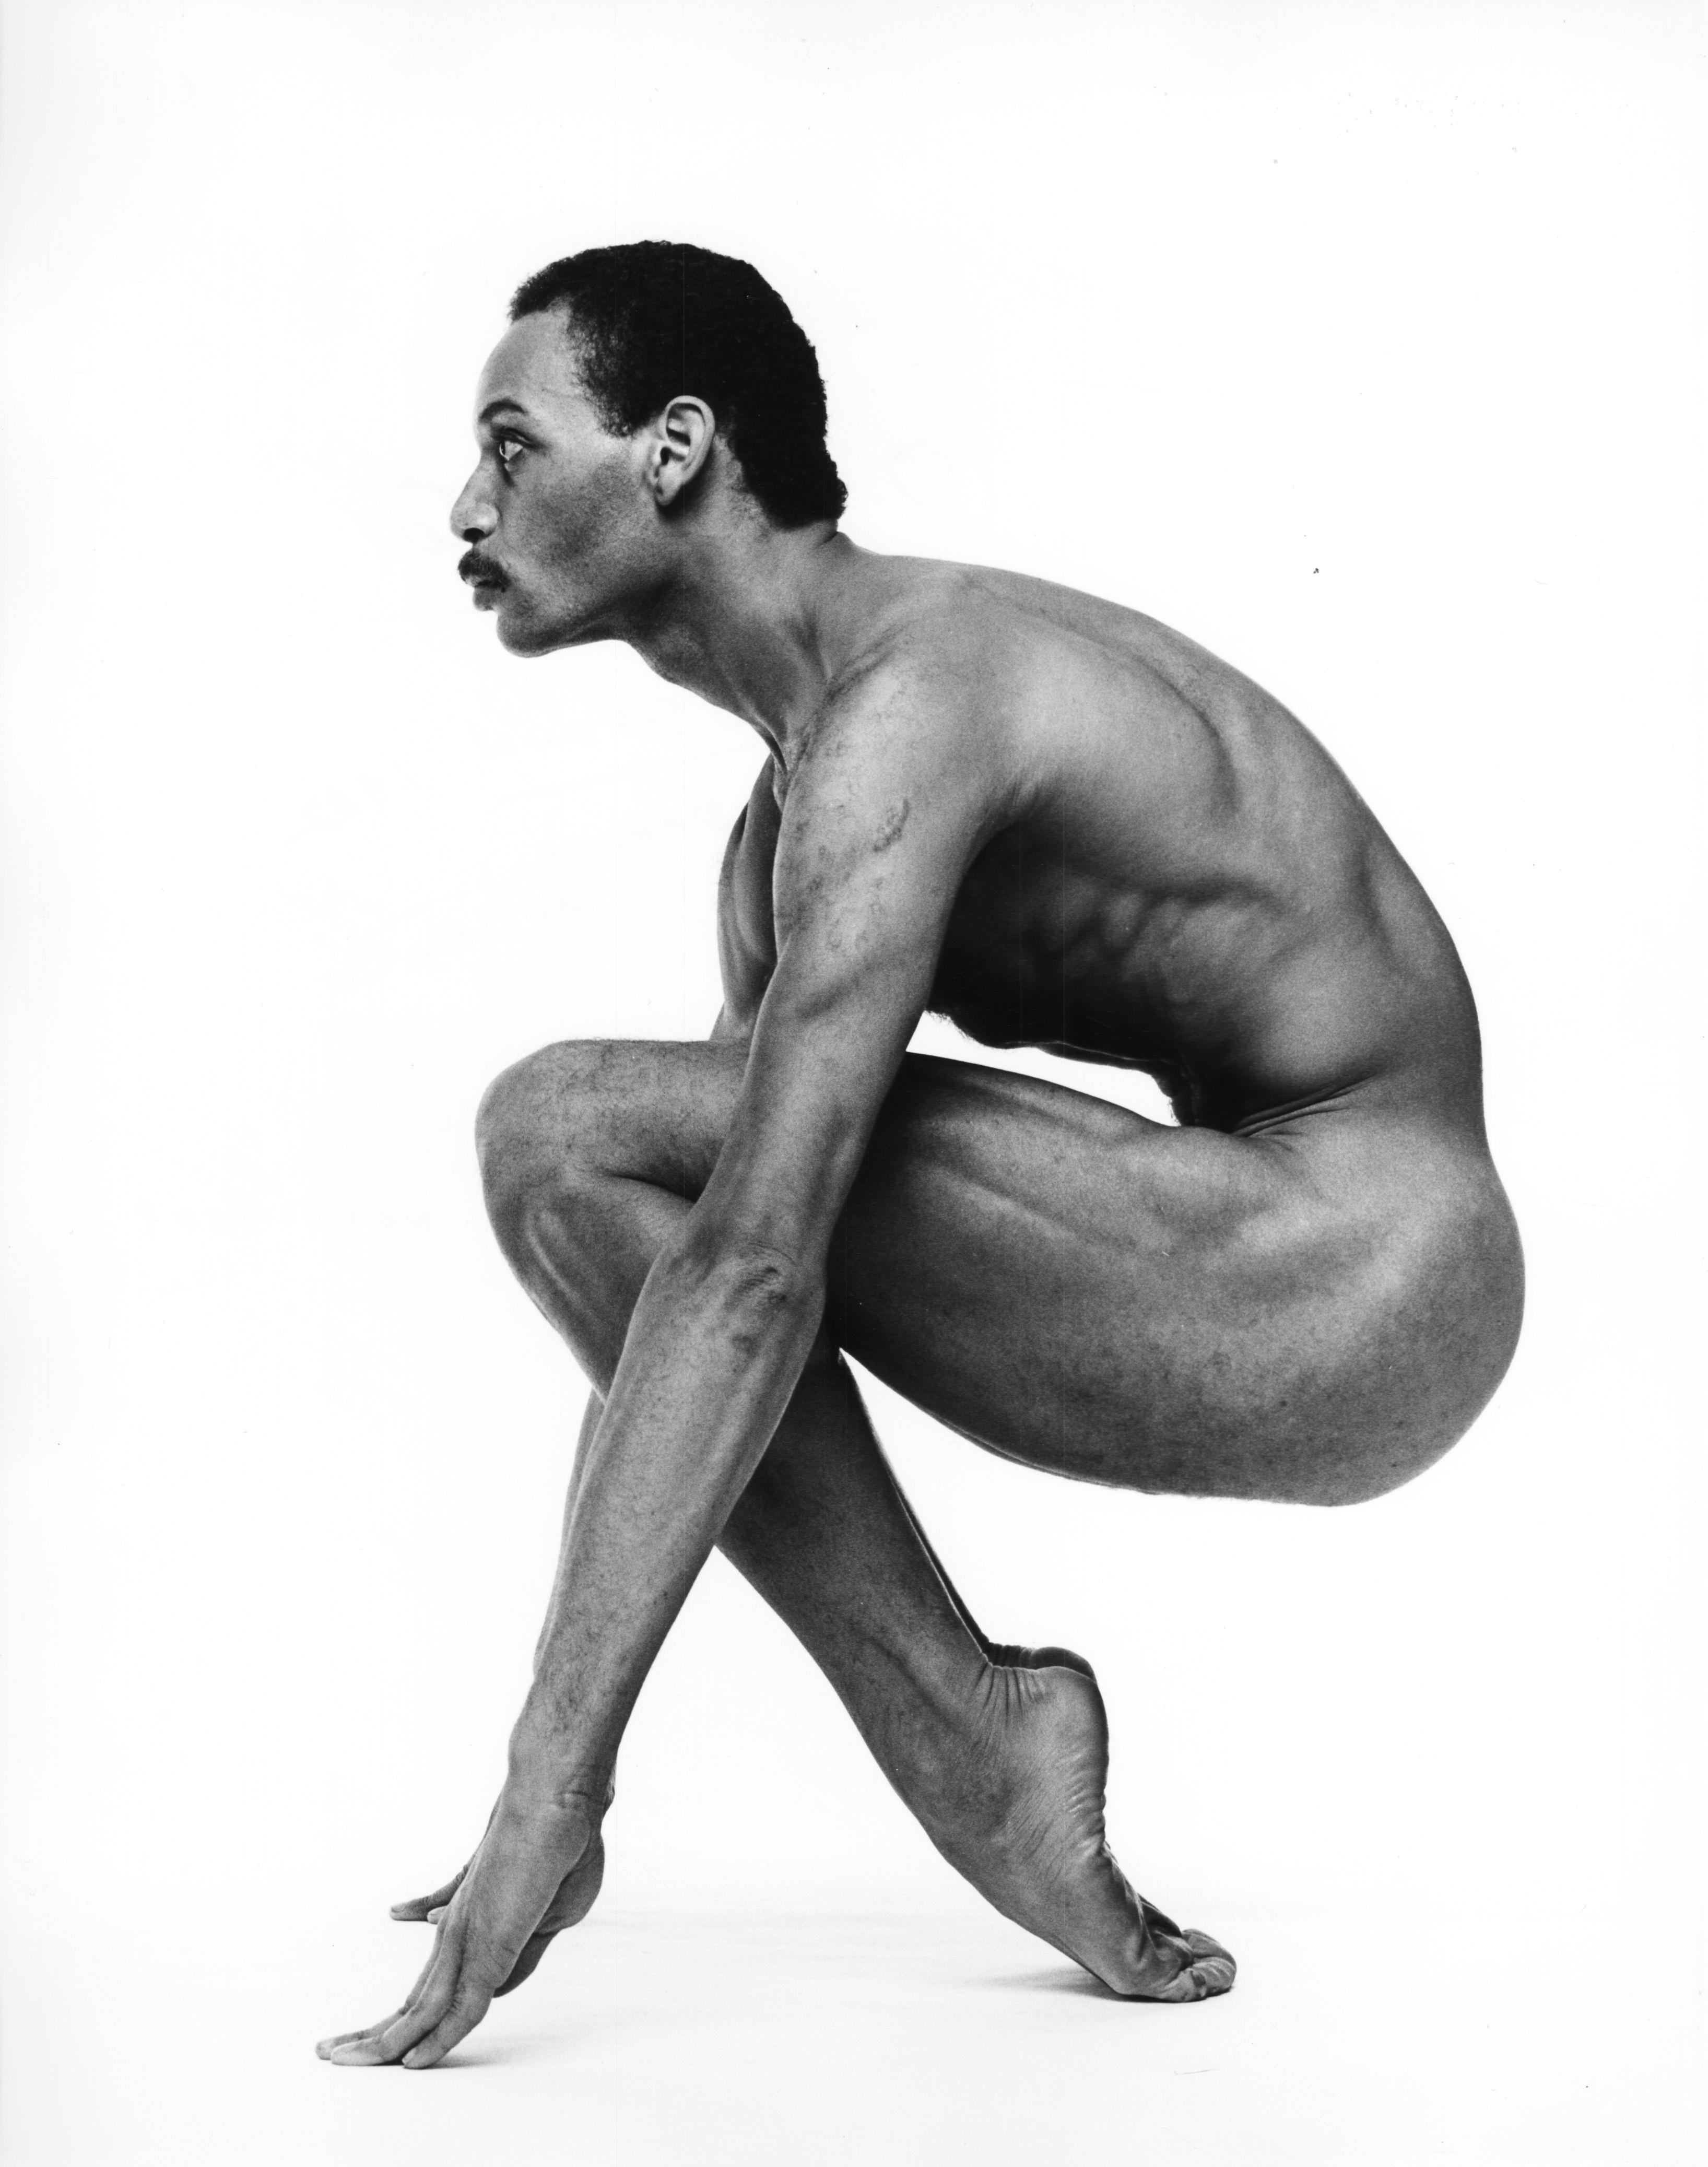 Dancer Kevin Brown, photographed nude for After Dark magazine, signed by Jack